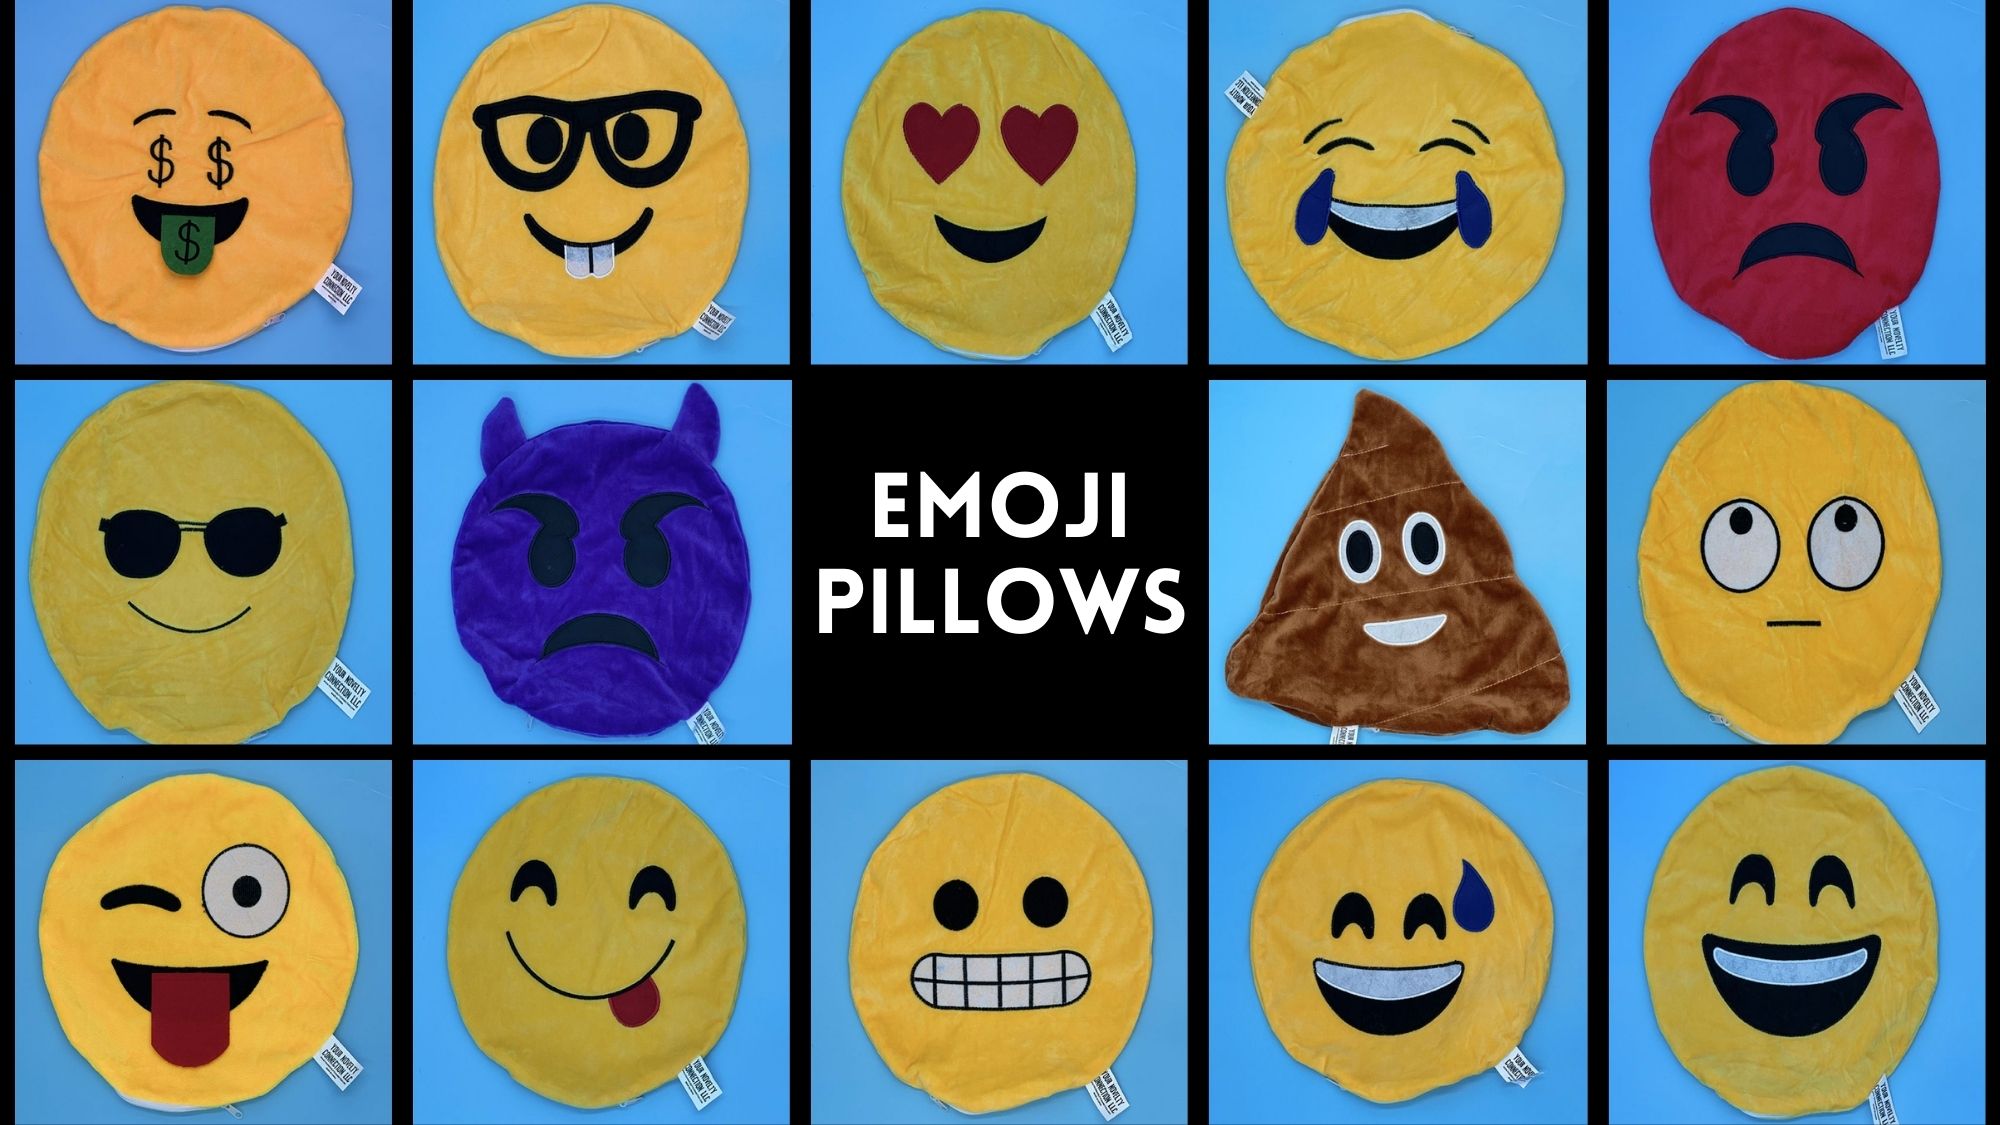 Assortment of emoji pillow options.